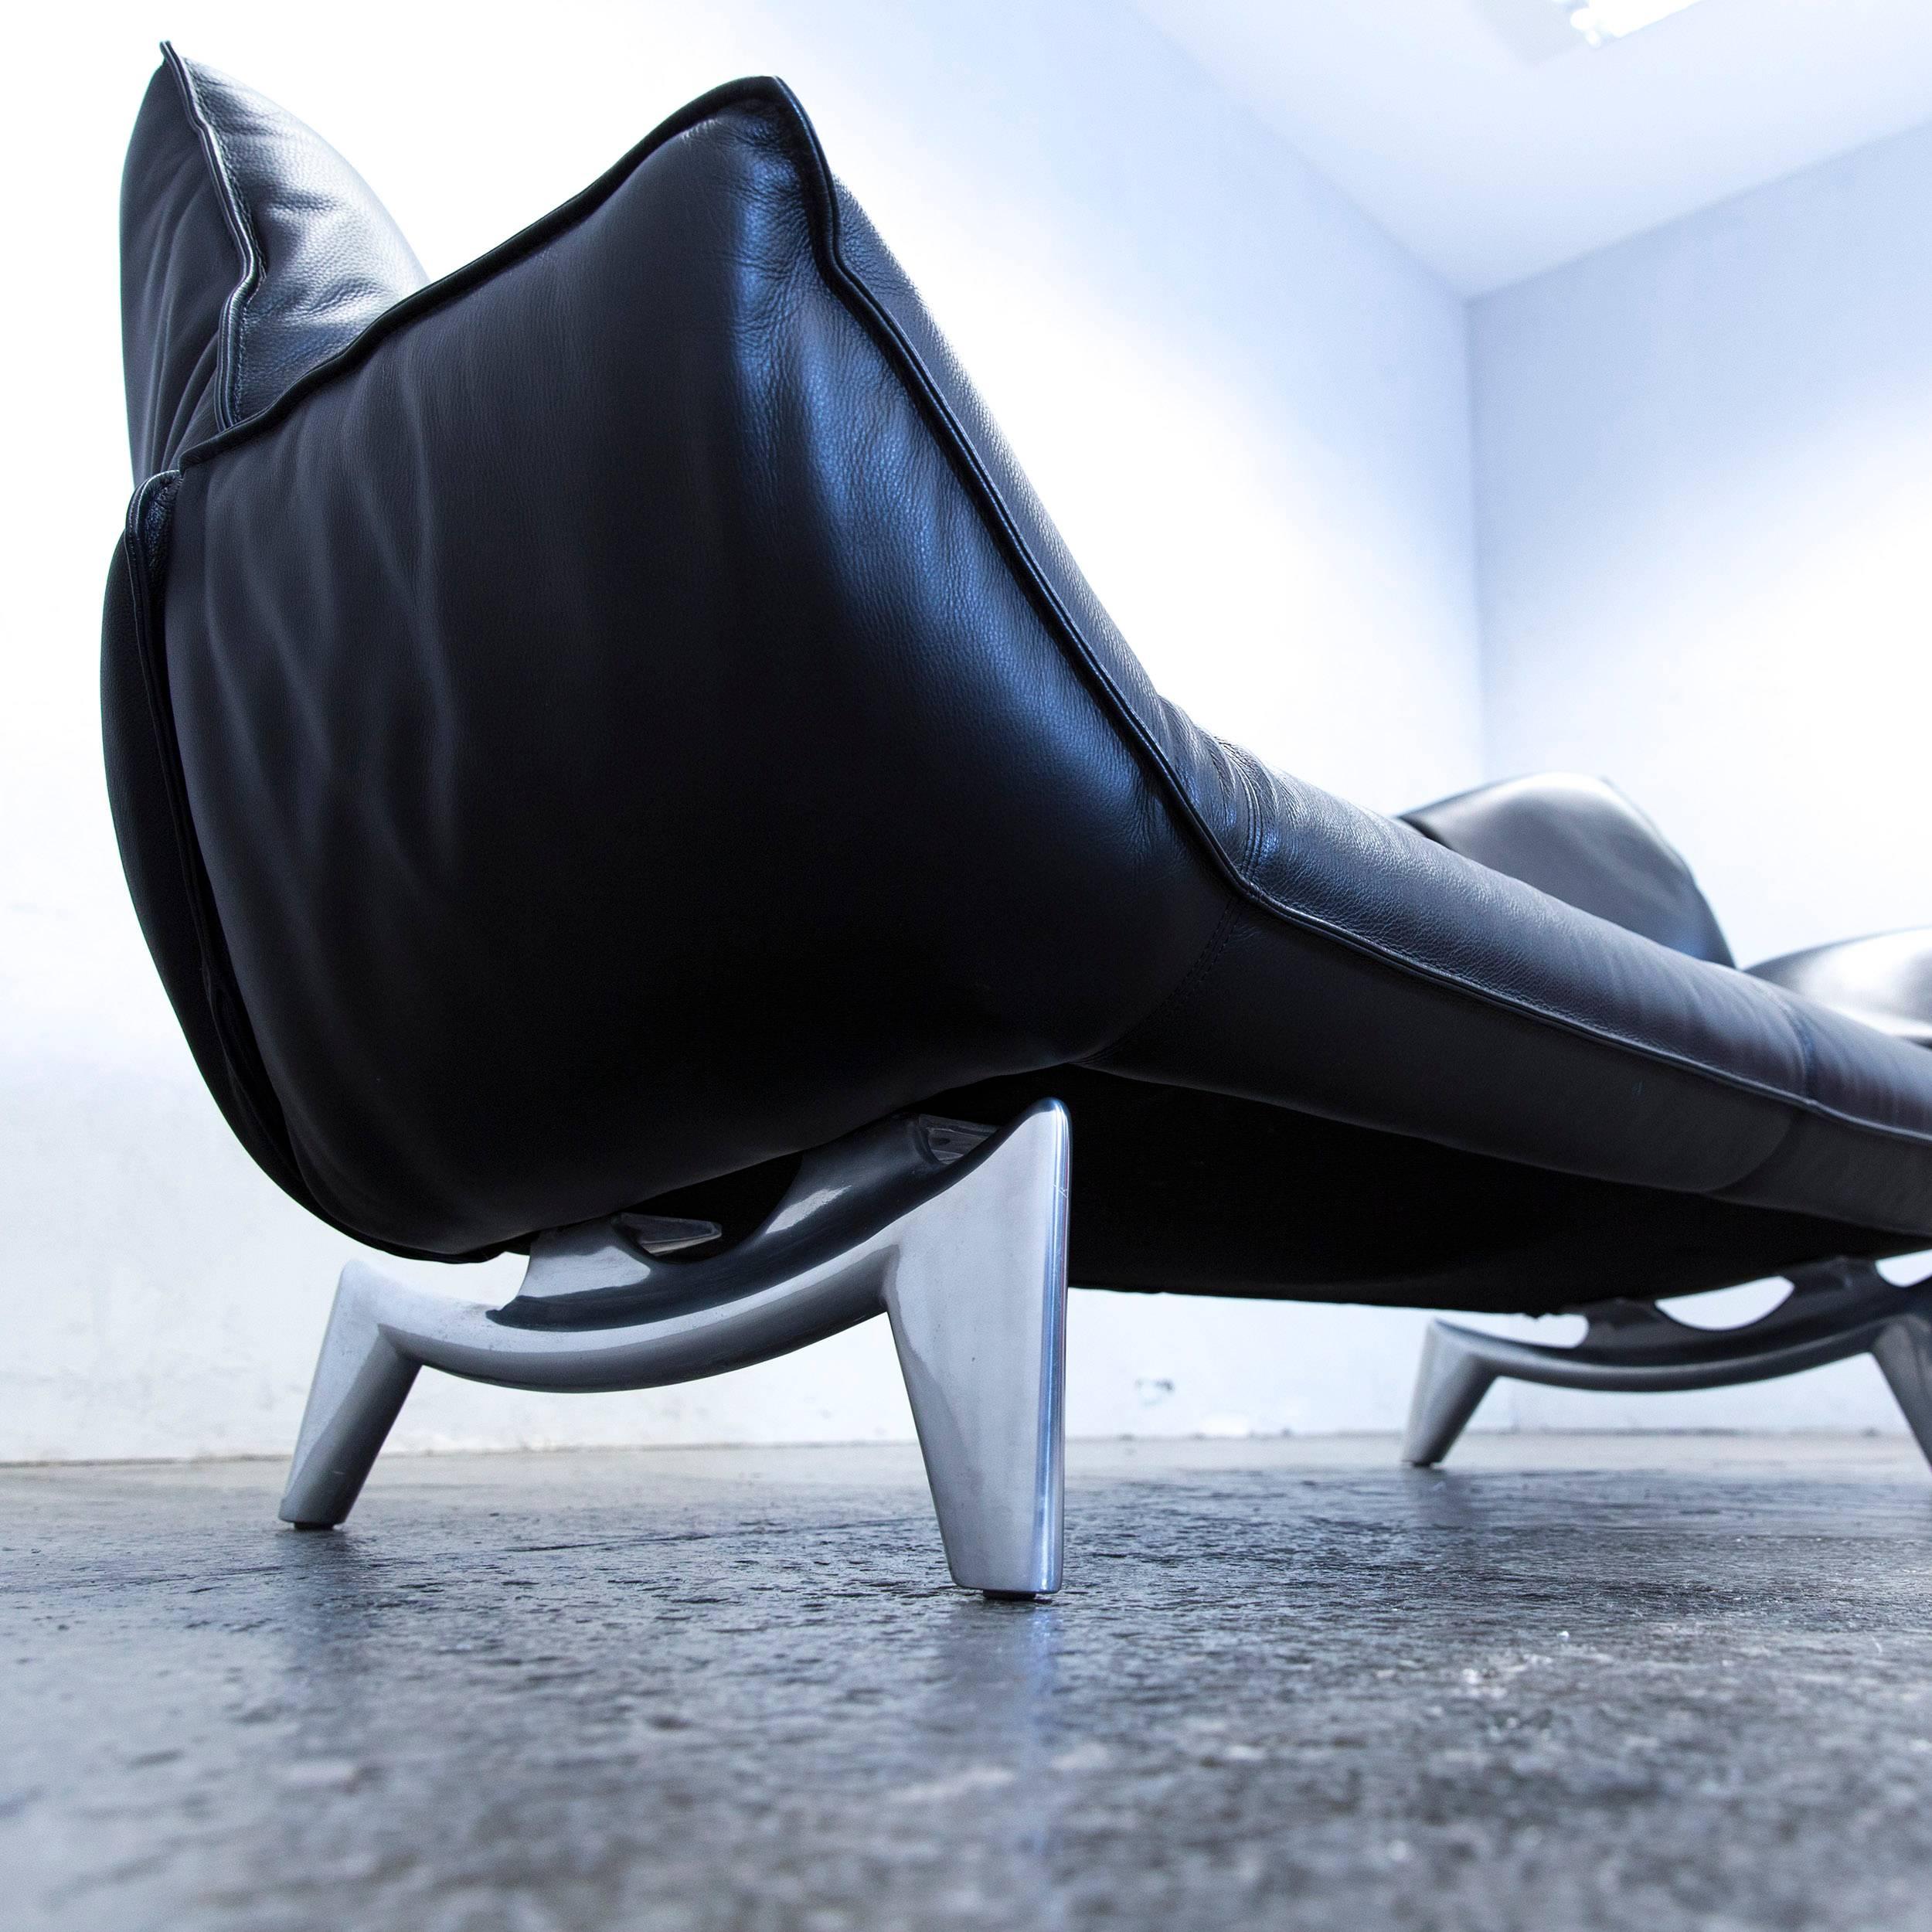 Leolux Tango Designer Leather Sofa Black Two-Seat Function Modern For Sale 1